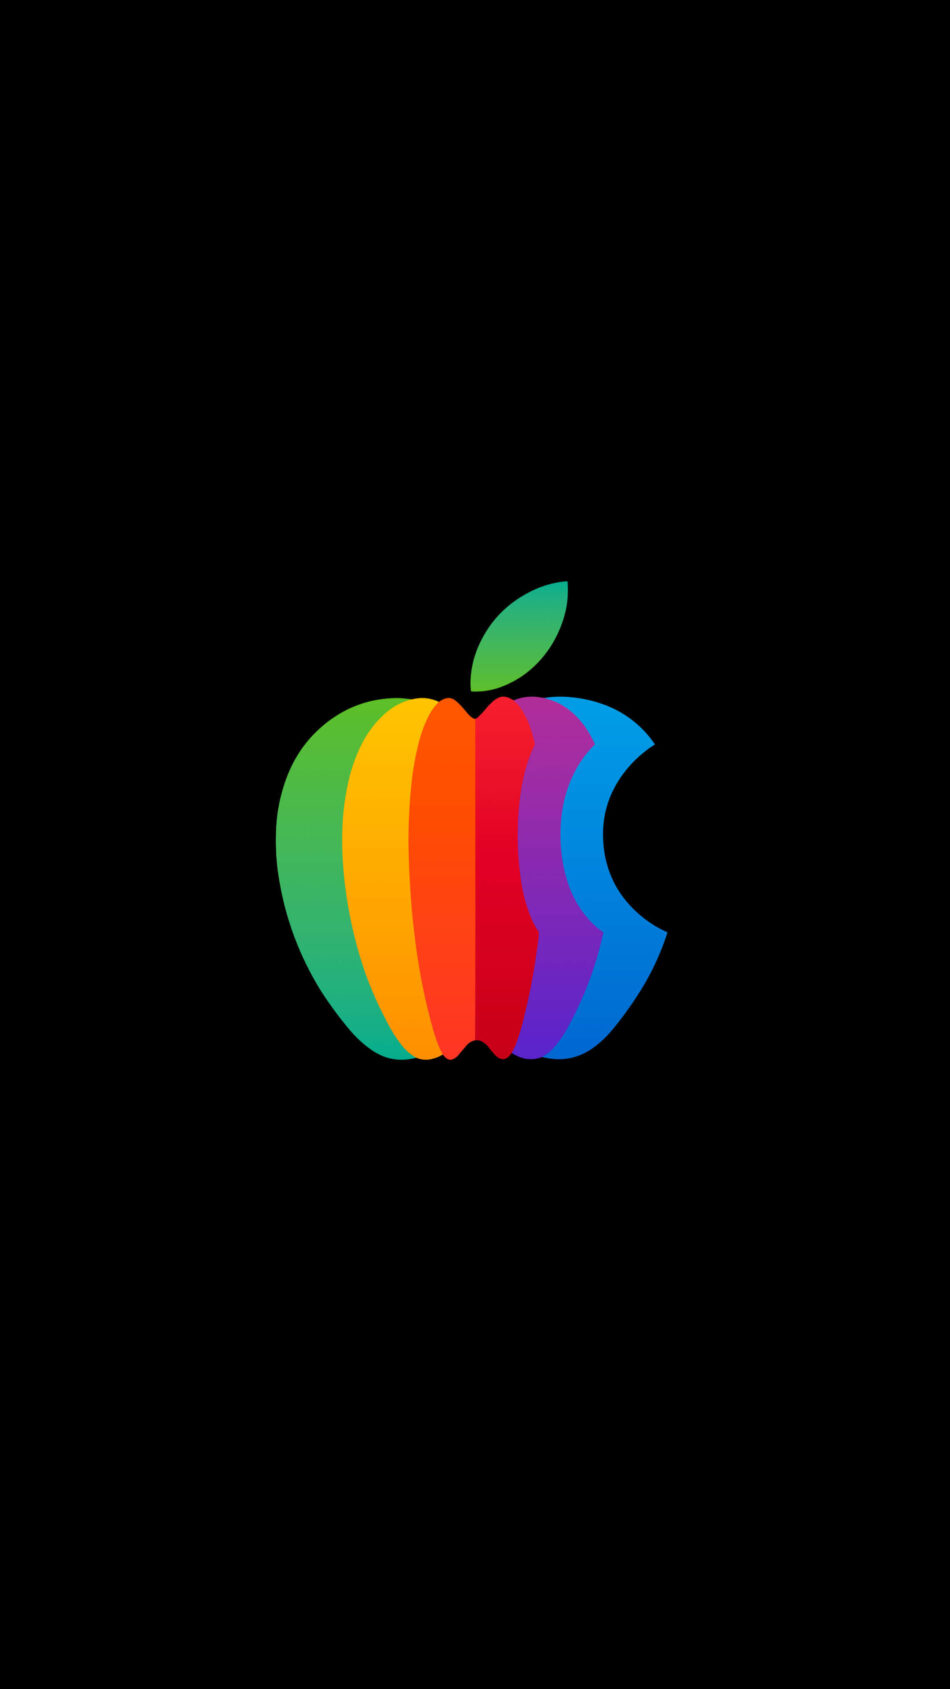 Colorful Rainbow Apple Logo Dark Background 4K Ultra HD Mobile Wallpaper